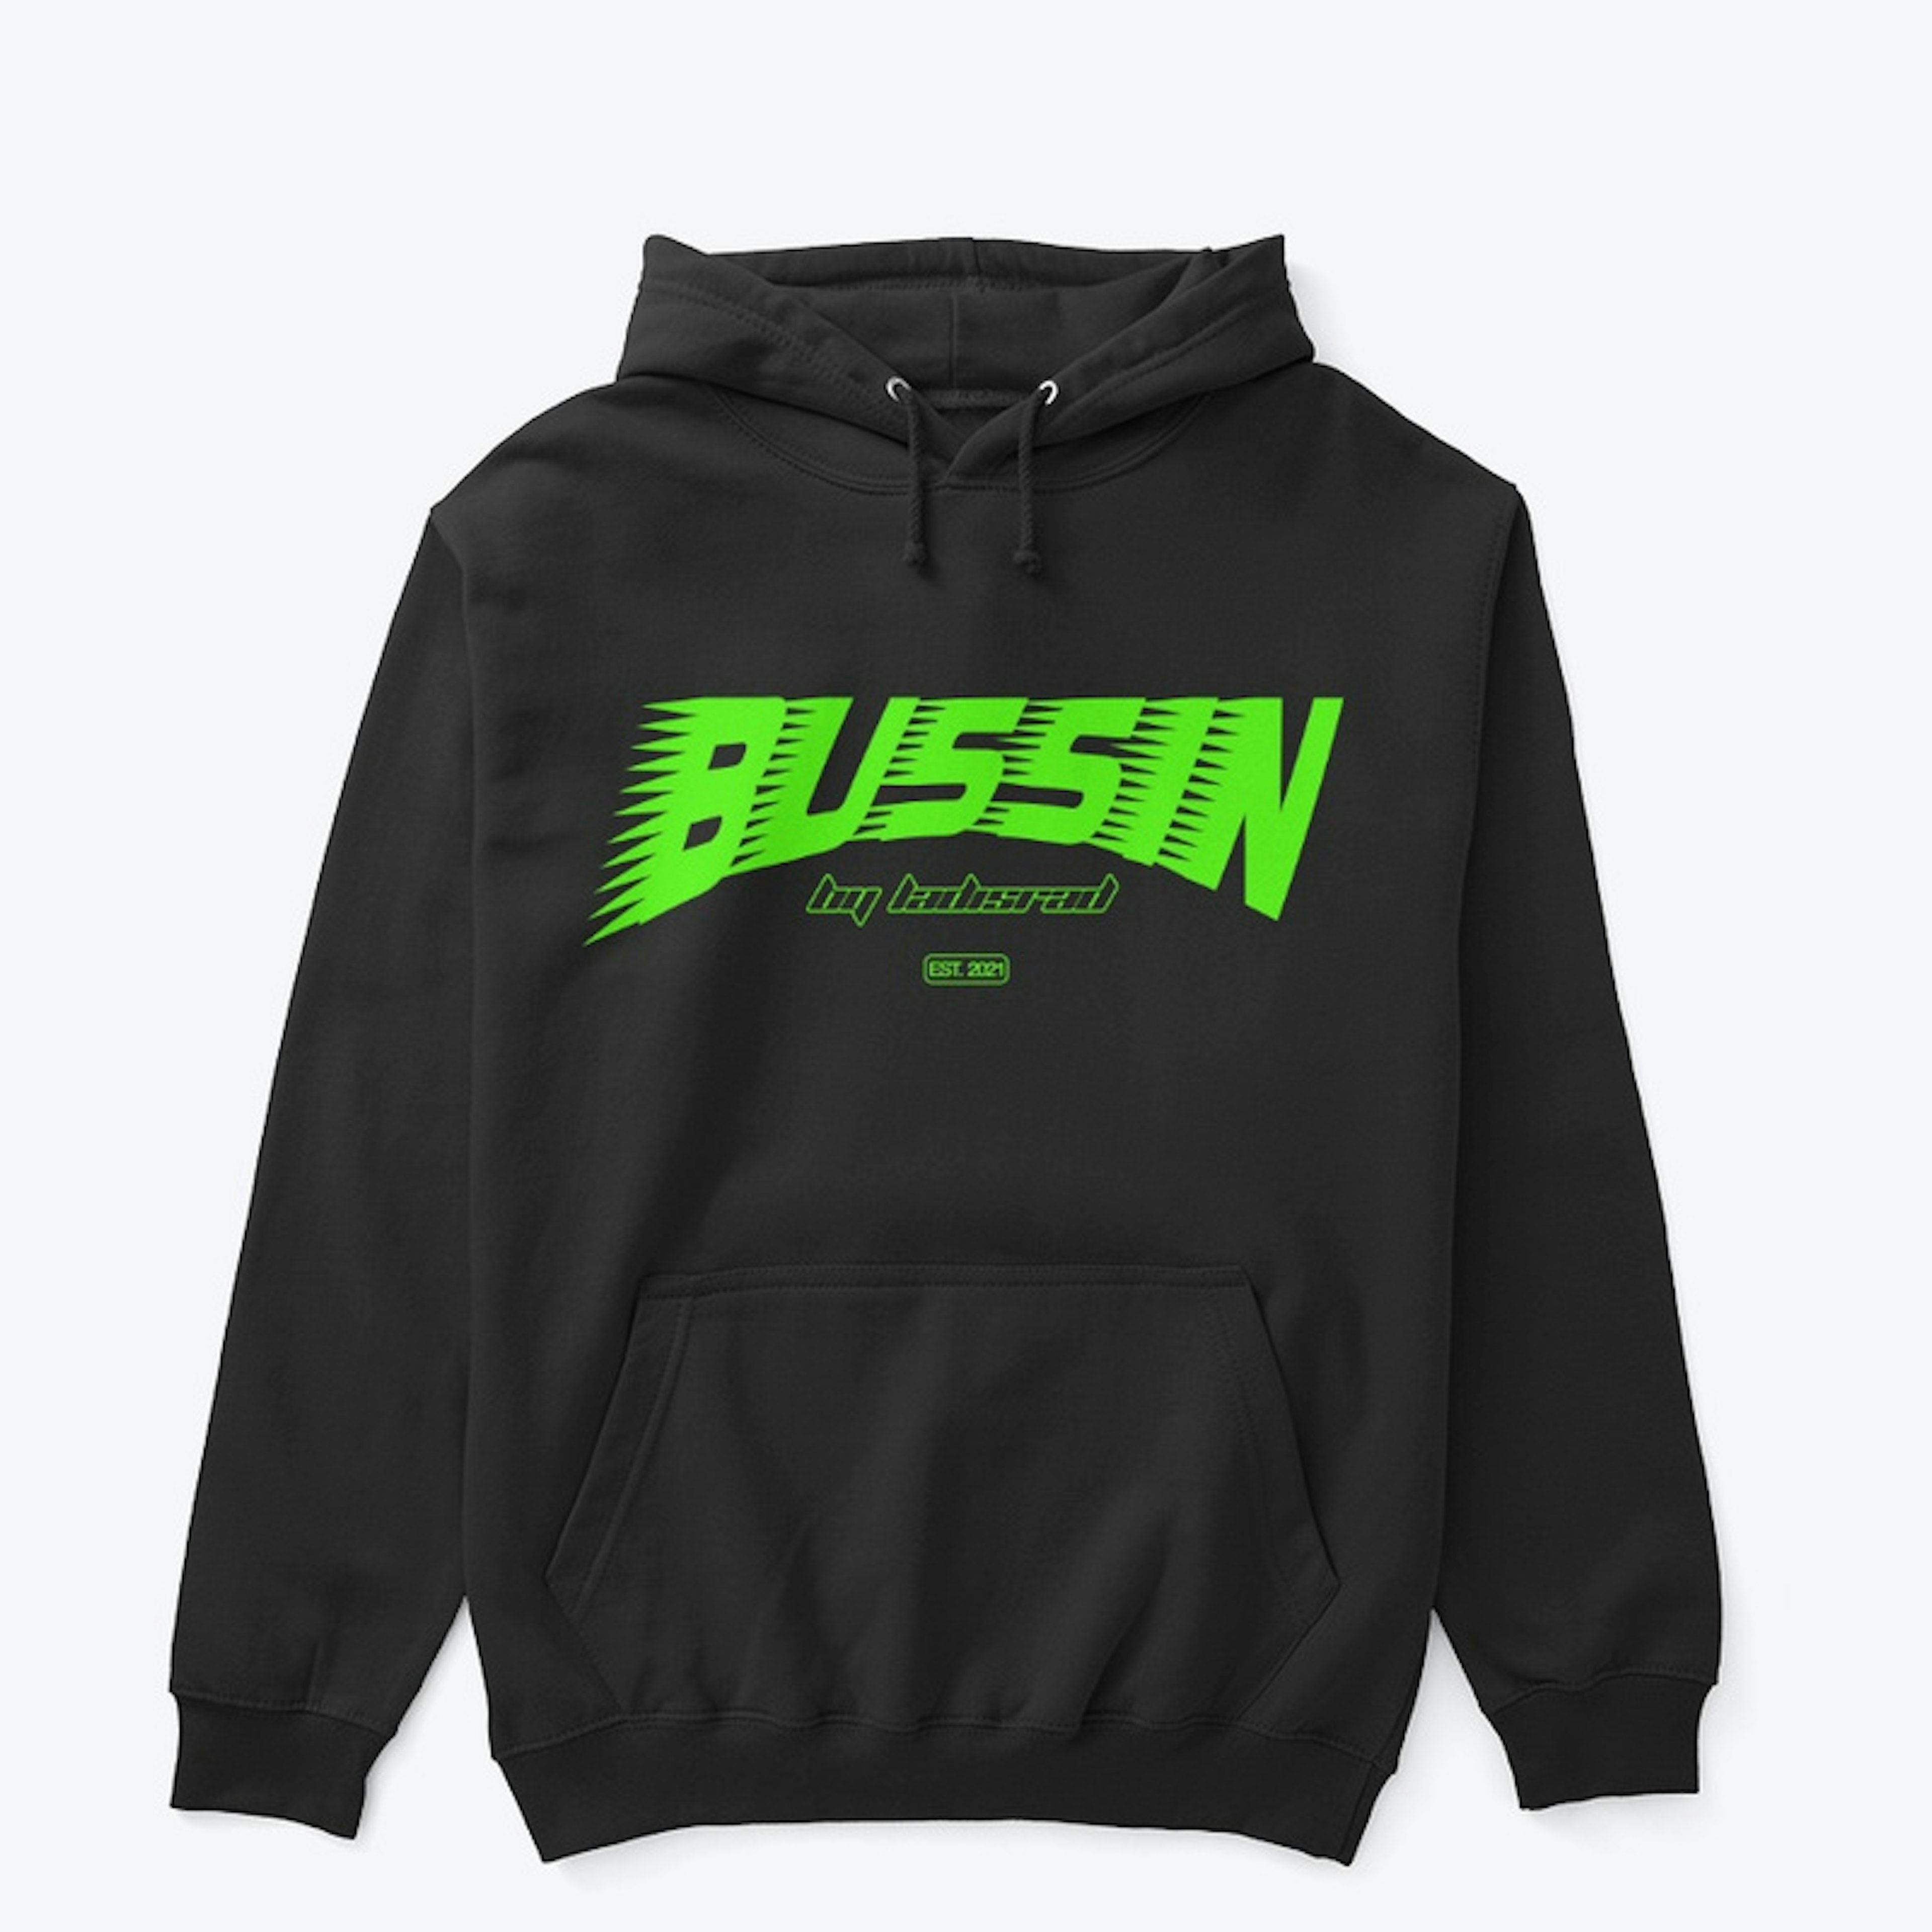 Bussin' Design